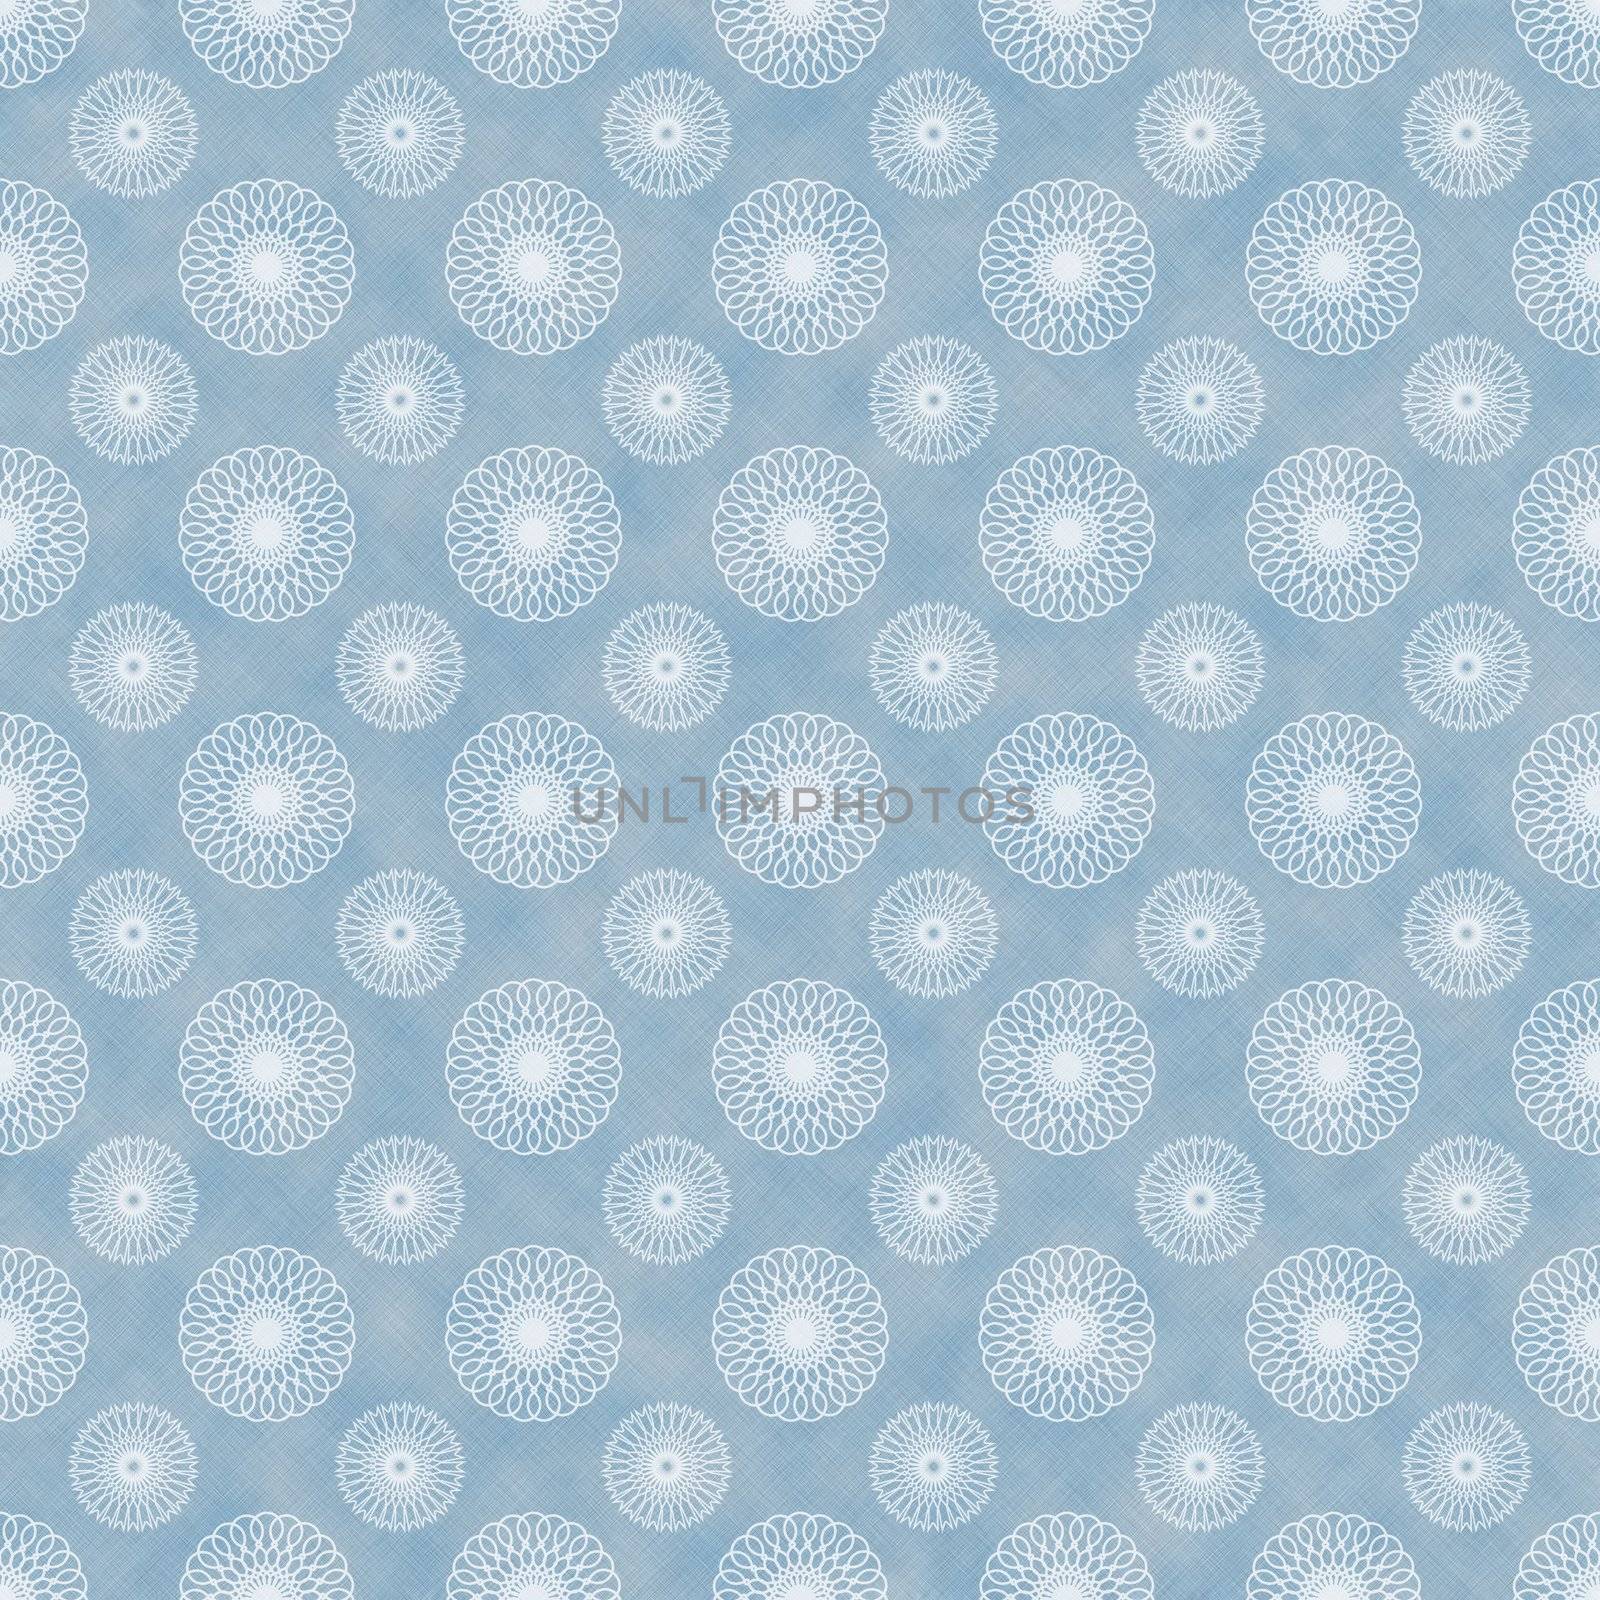 White kaleidoscope spirals on faded blue denim chambray fabric